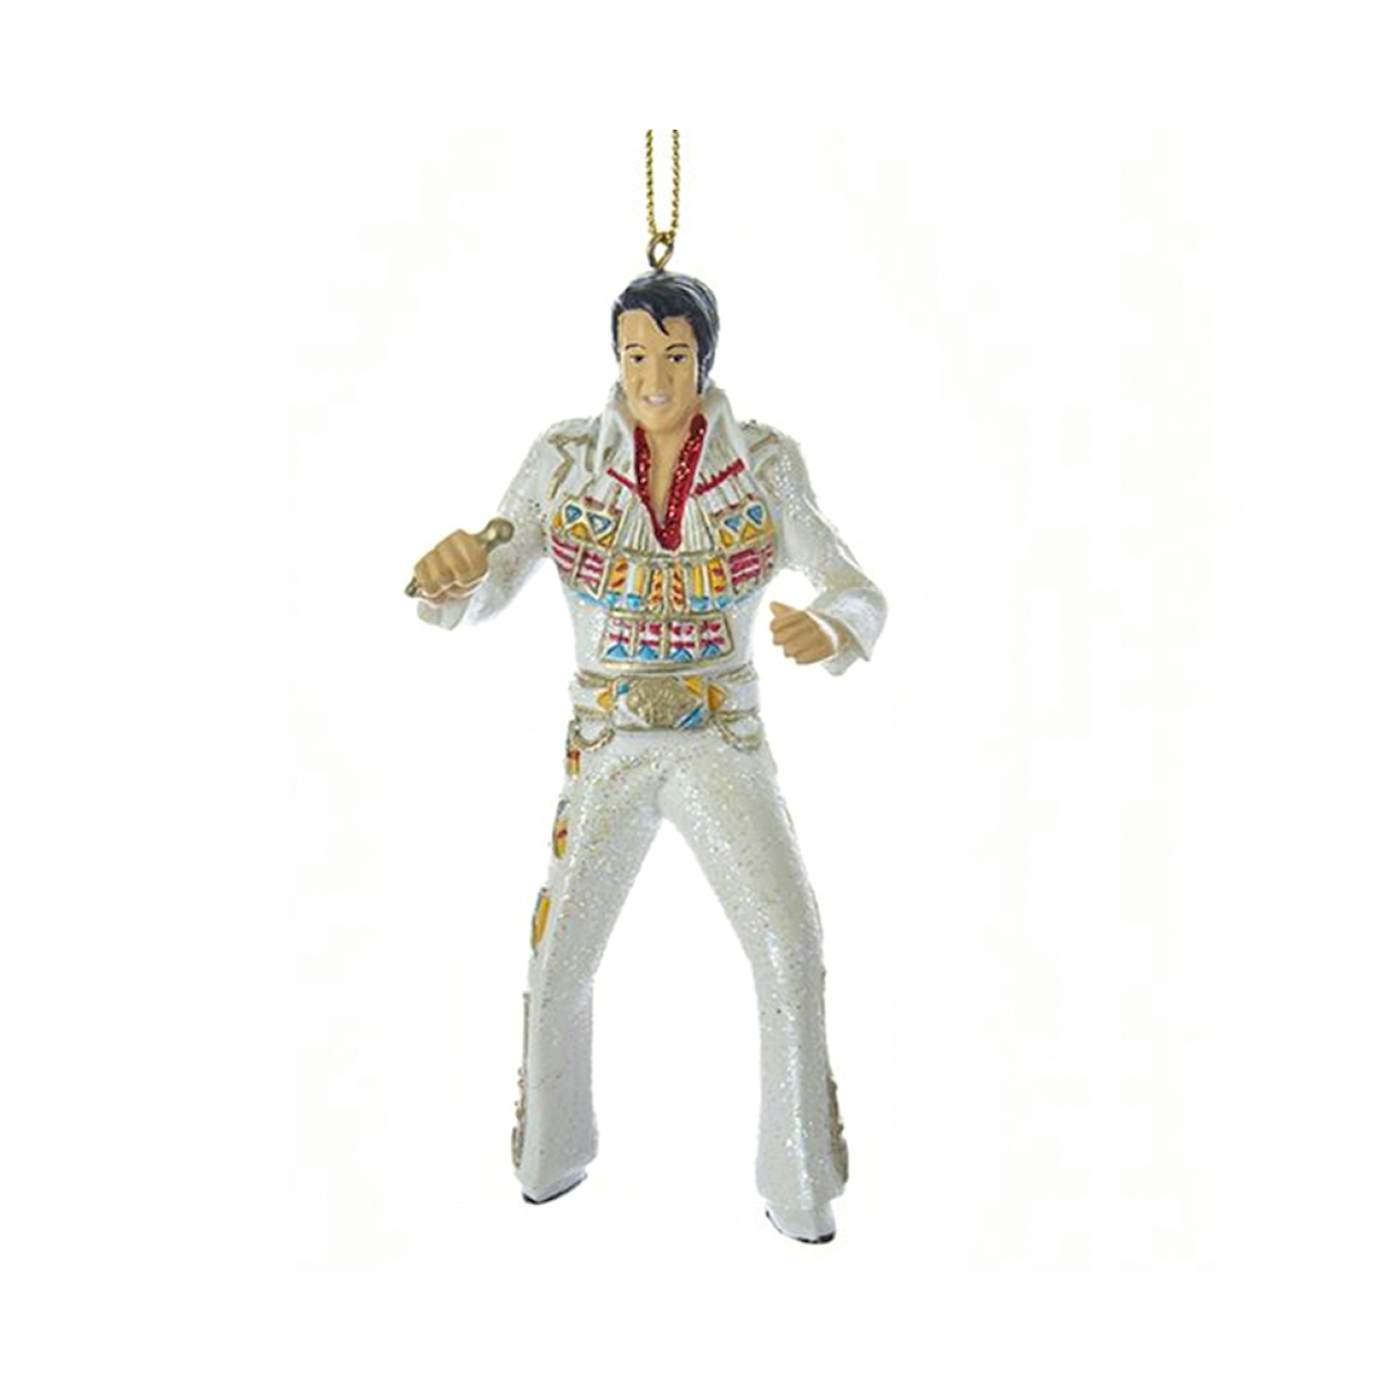 Elvis Presley Inca Jumpsuit Ornament